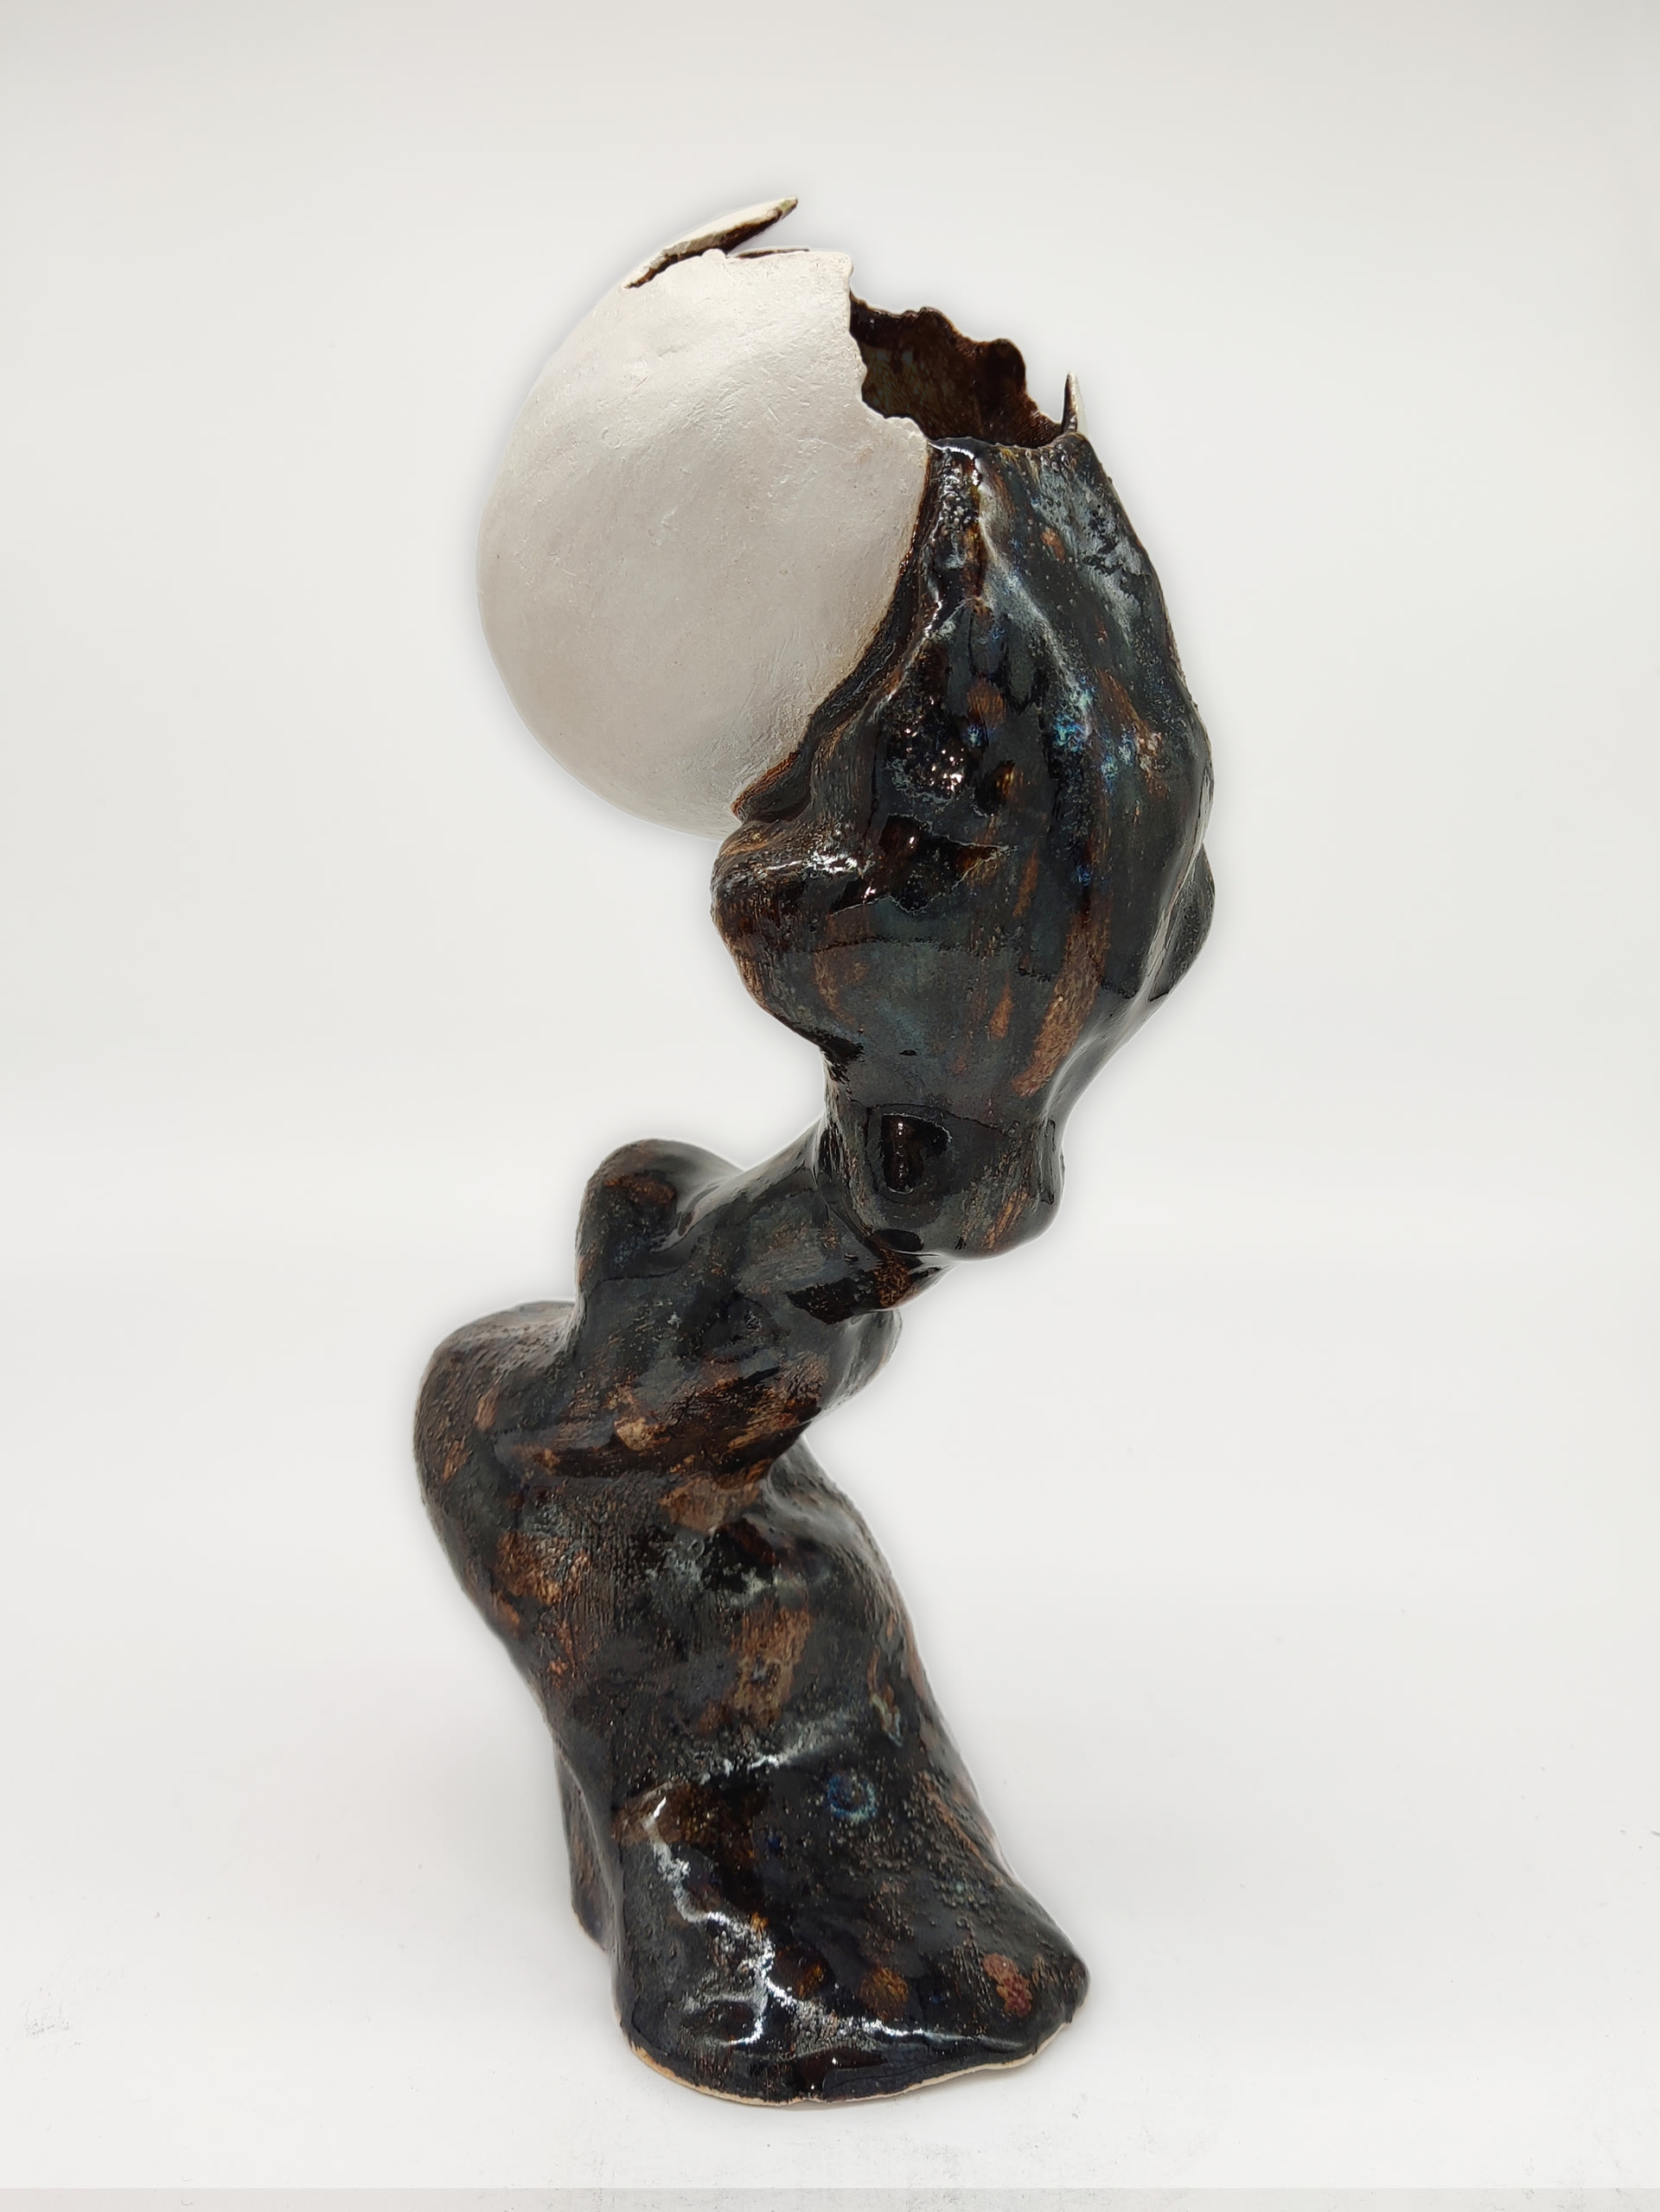 A egg shape sculpture with fluid part support it